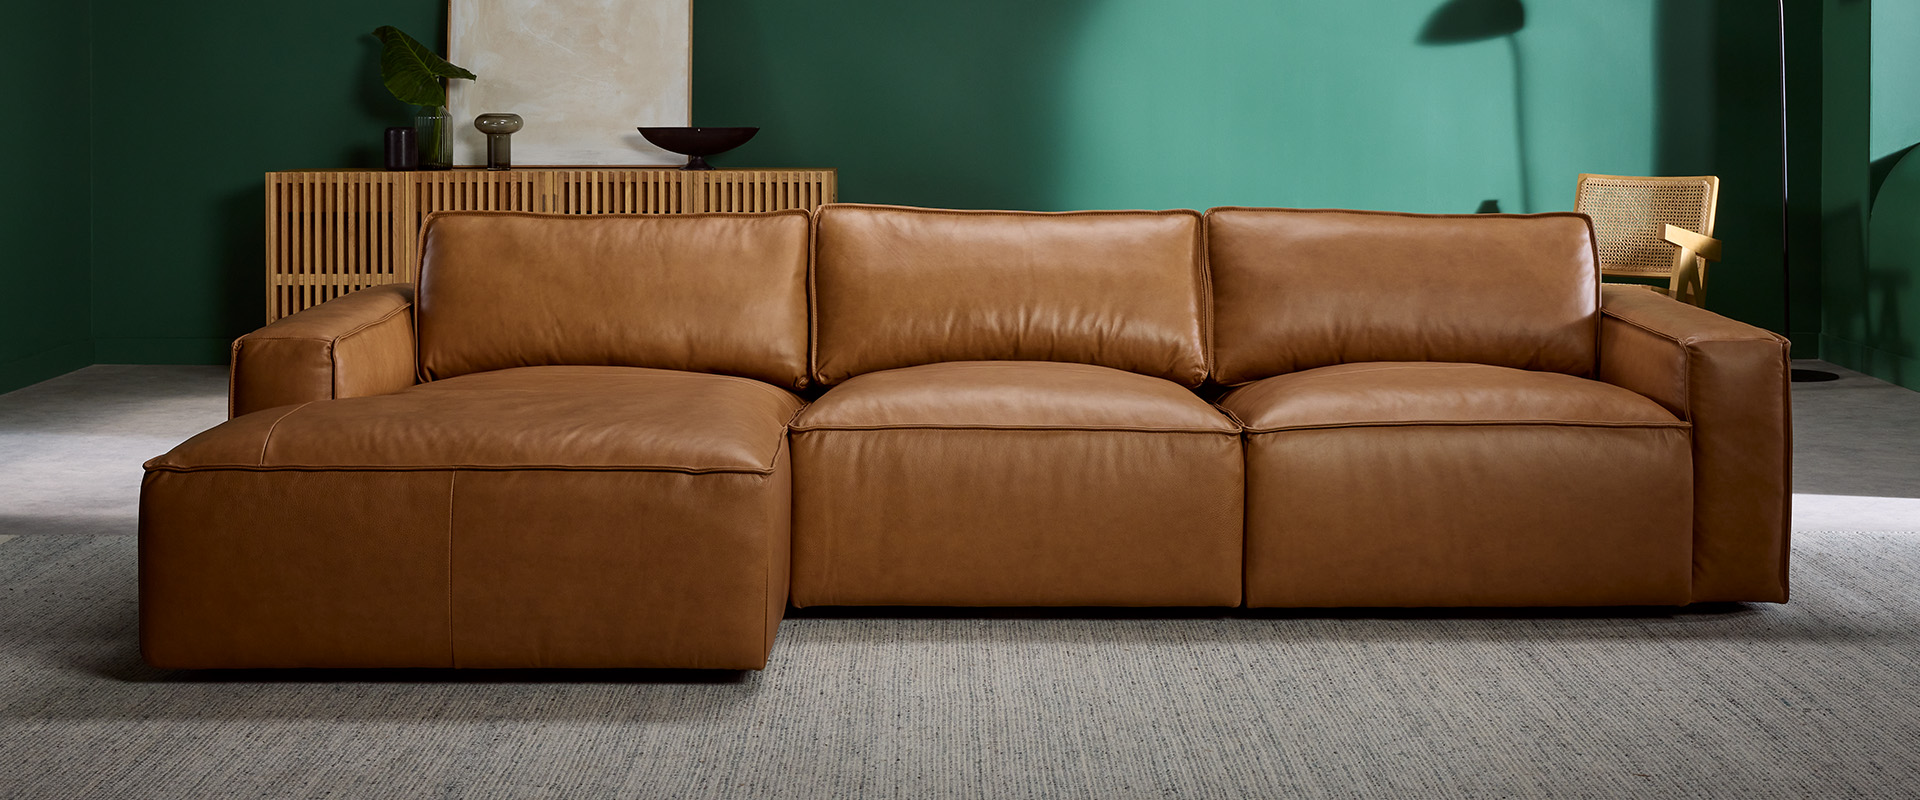 Denver Modular Modern Leather Lounge